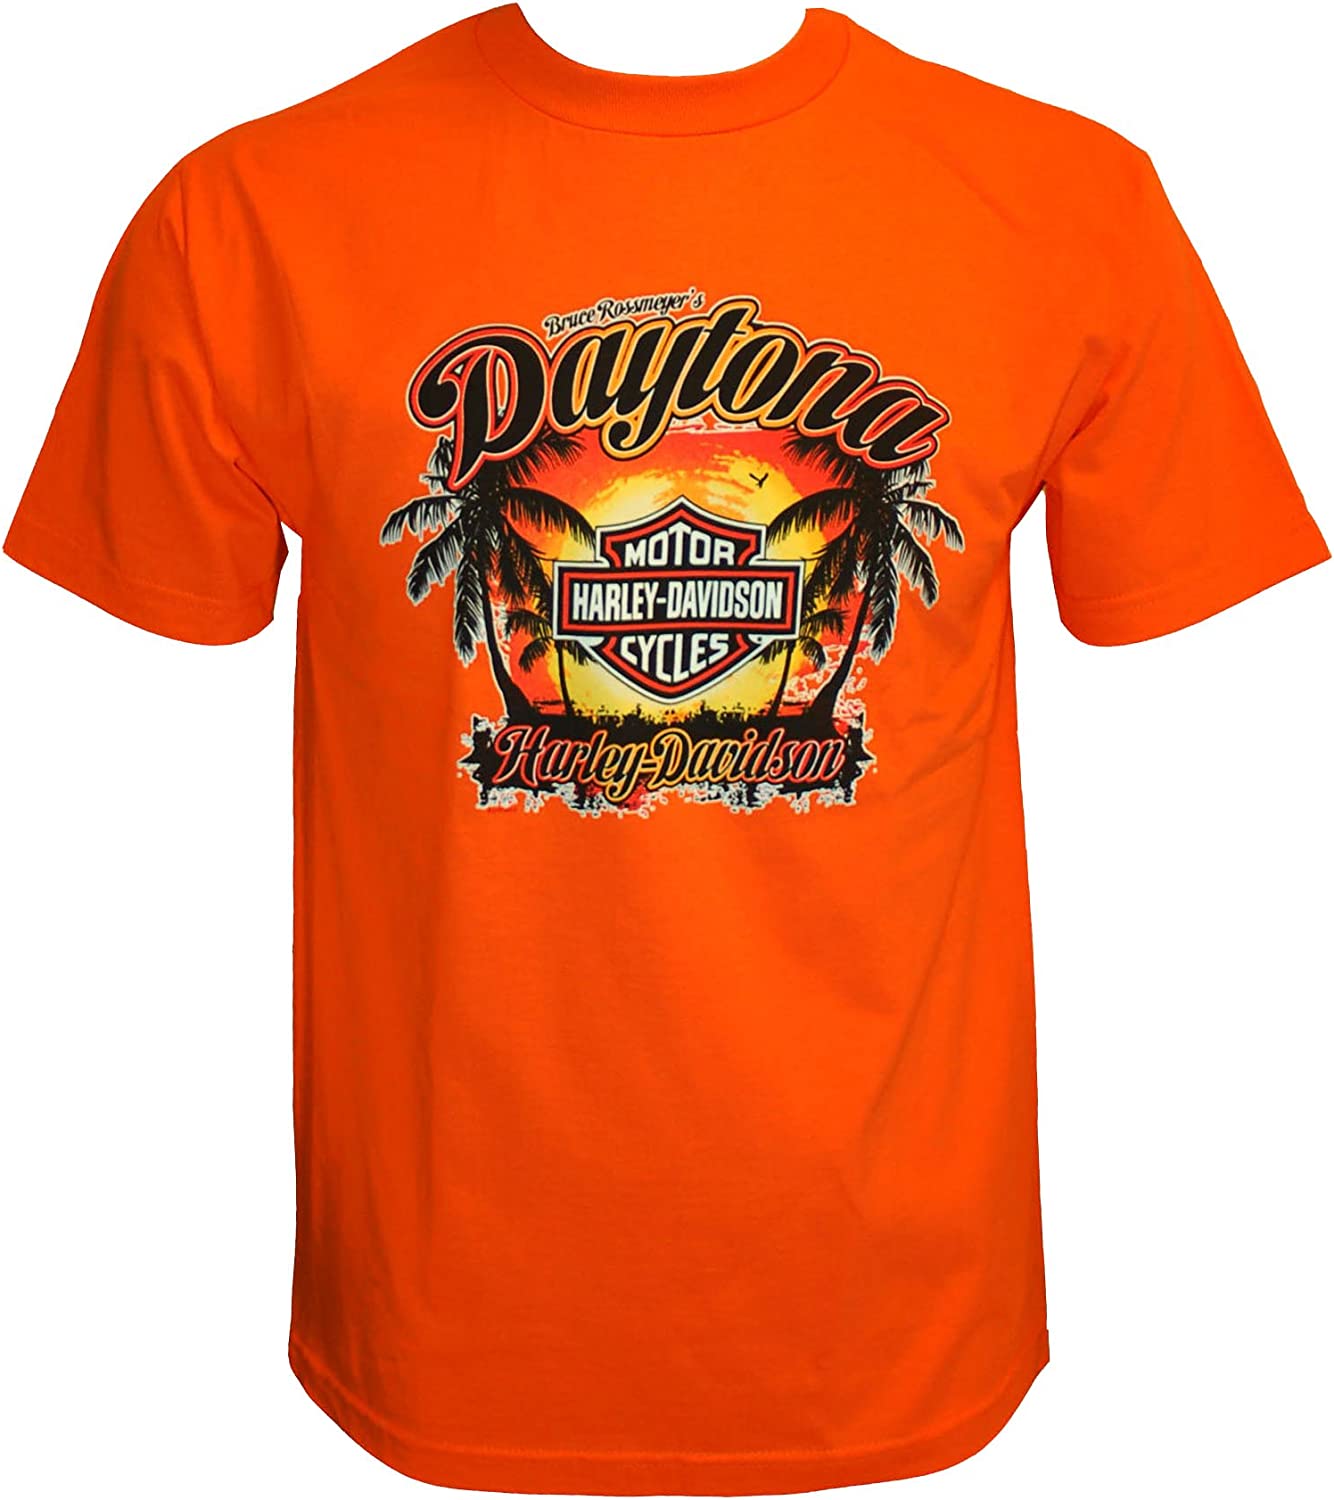 Harley-Davidson Bruce Rossmeyer's Daytona - Camiseta para hombre, color naranja